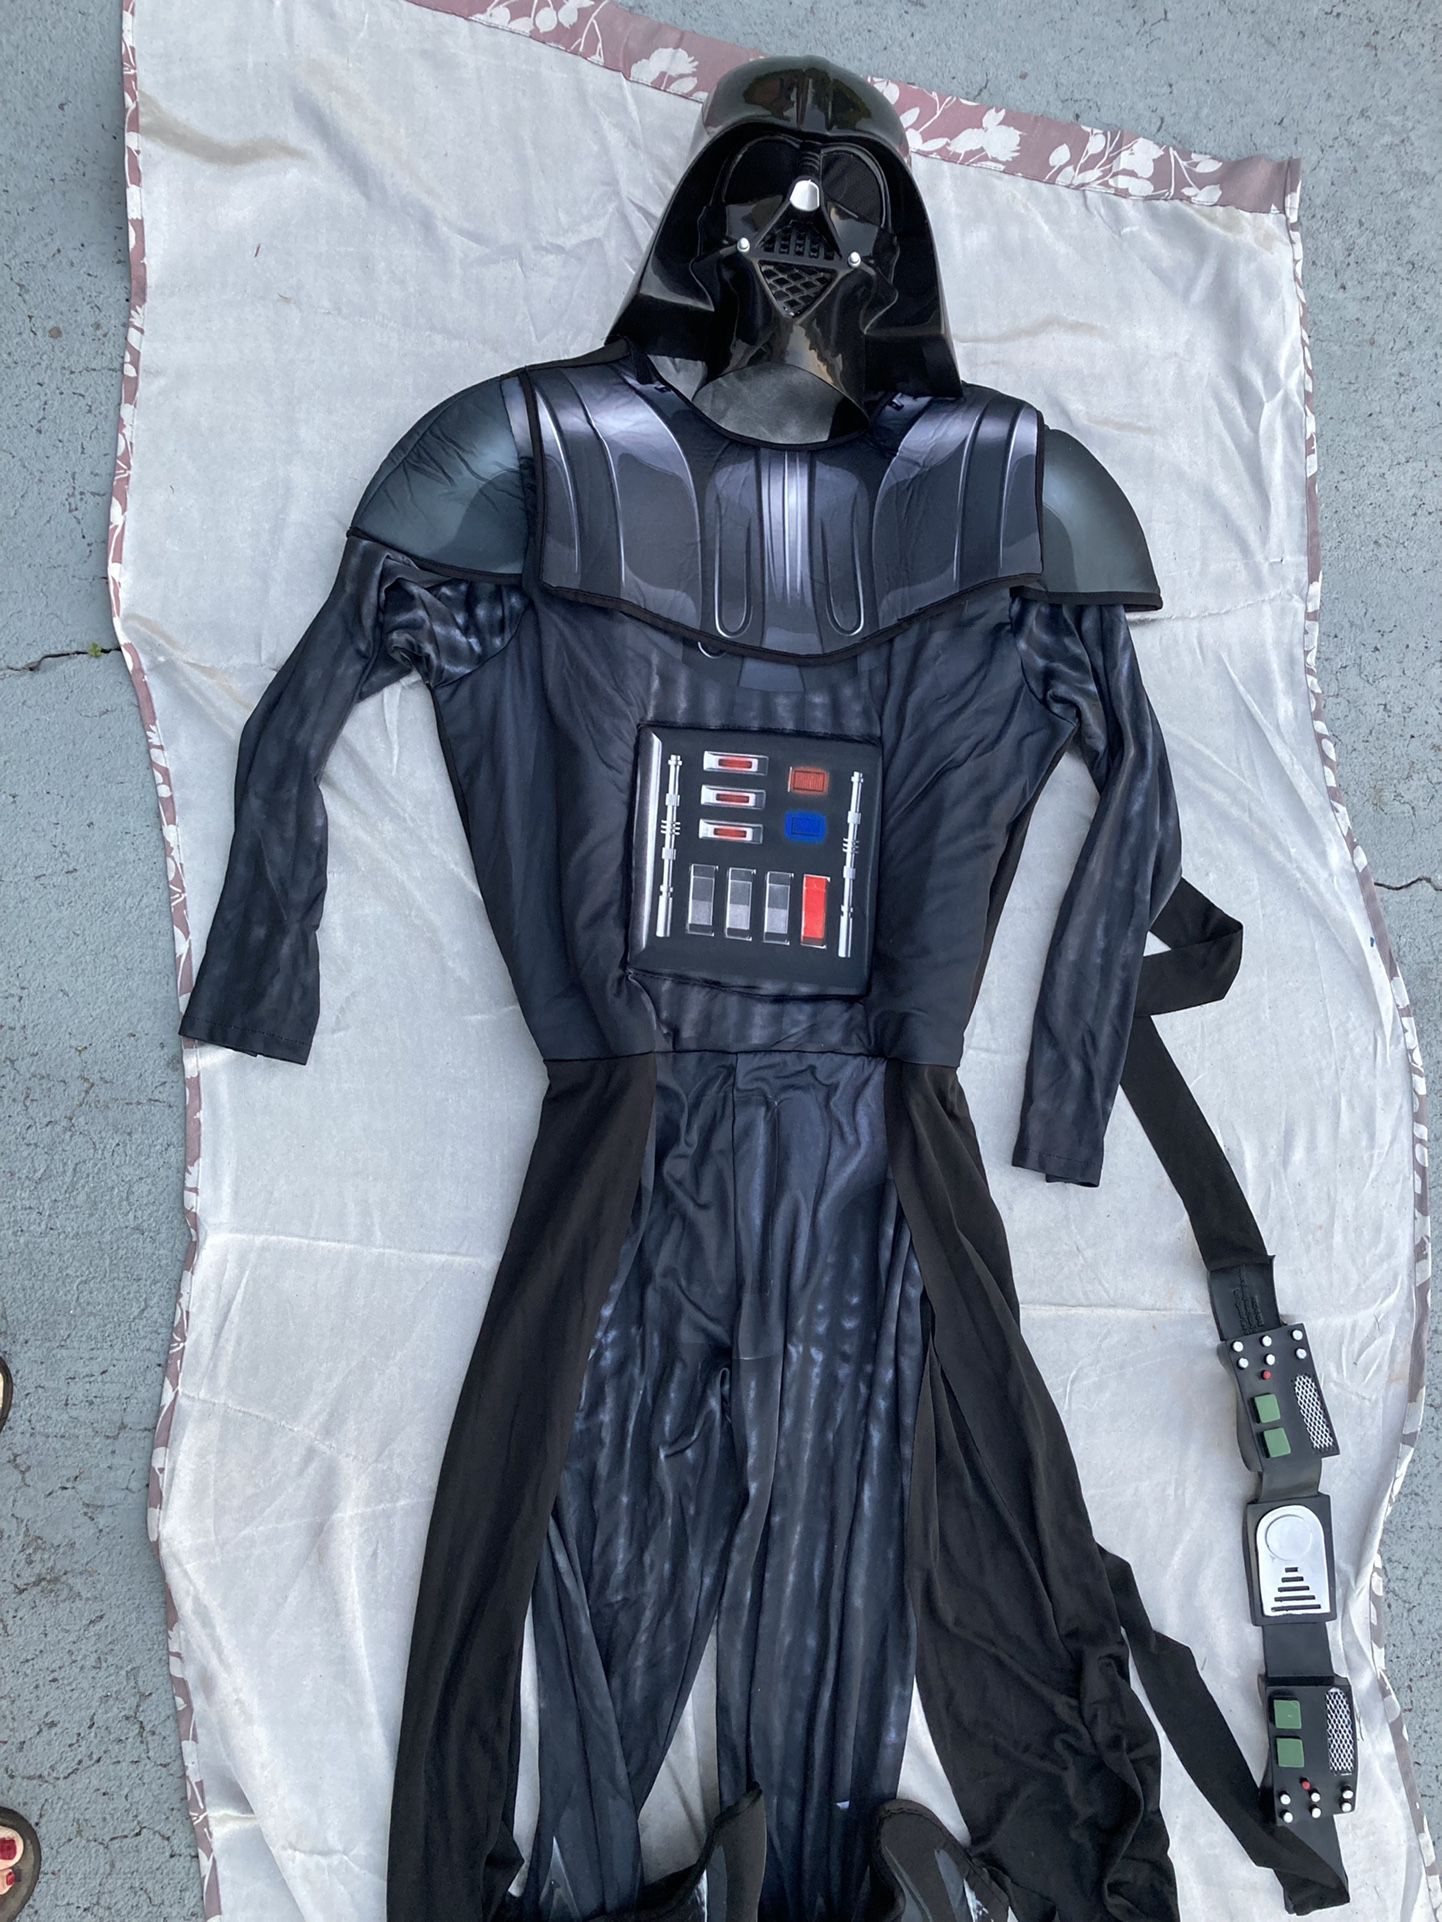 Halloween Costume -Star Wars -Darth Vader - New/Never worn- Missing cape-Youth/Teen Size Medium